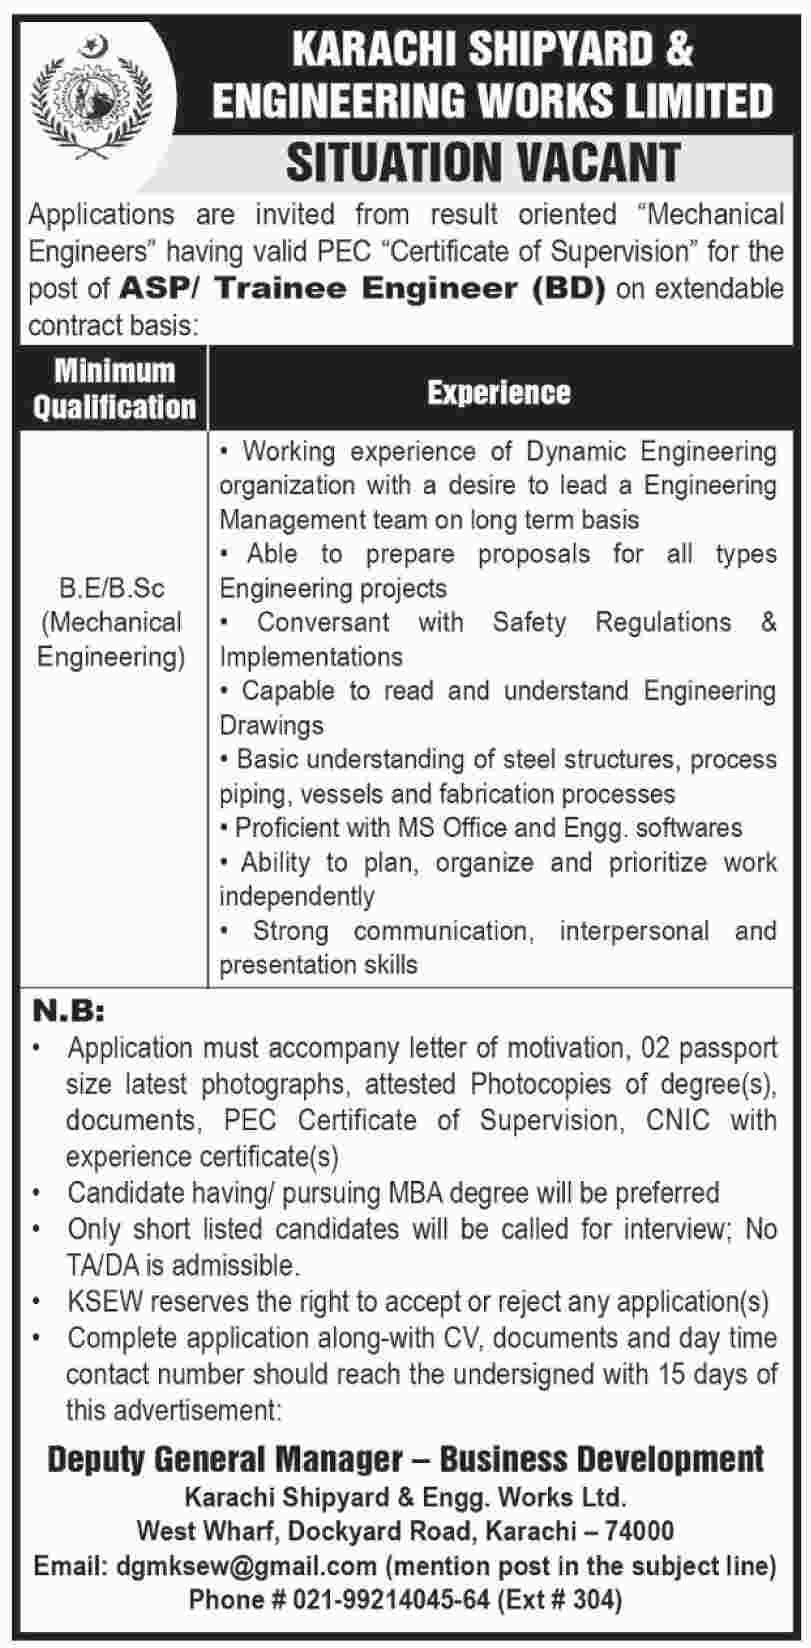 Jobs in Karachi Shipyard & Engineering Works Limited 13 May 2018